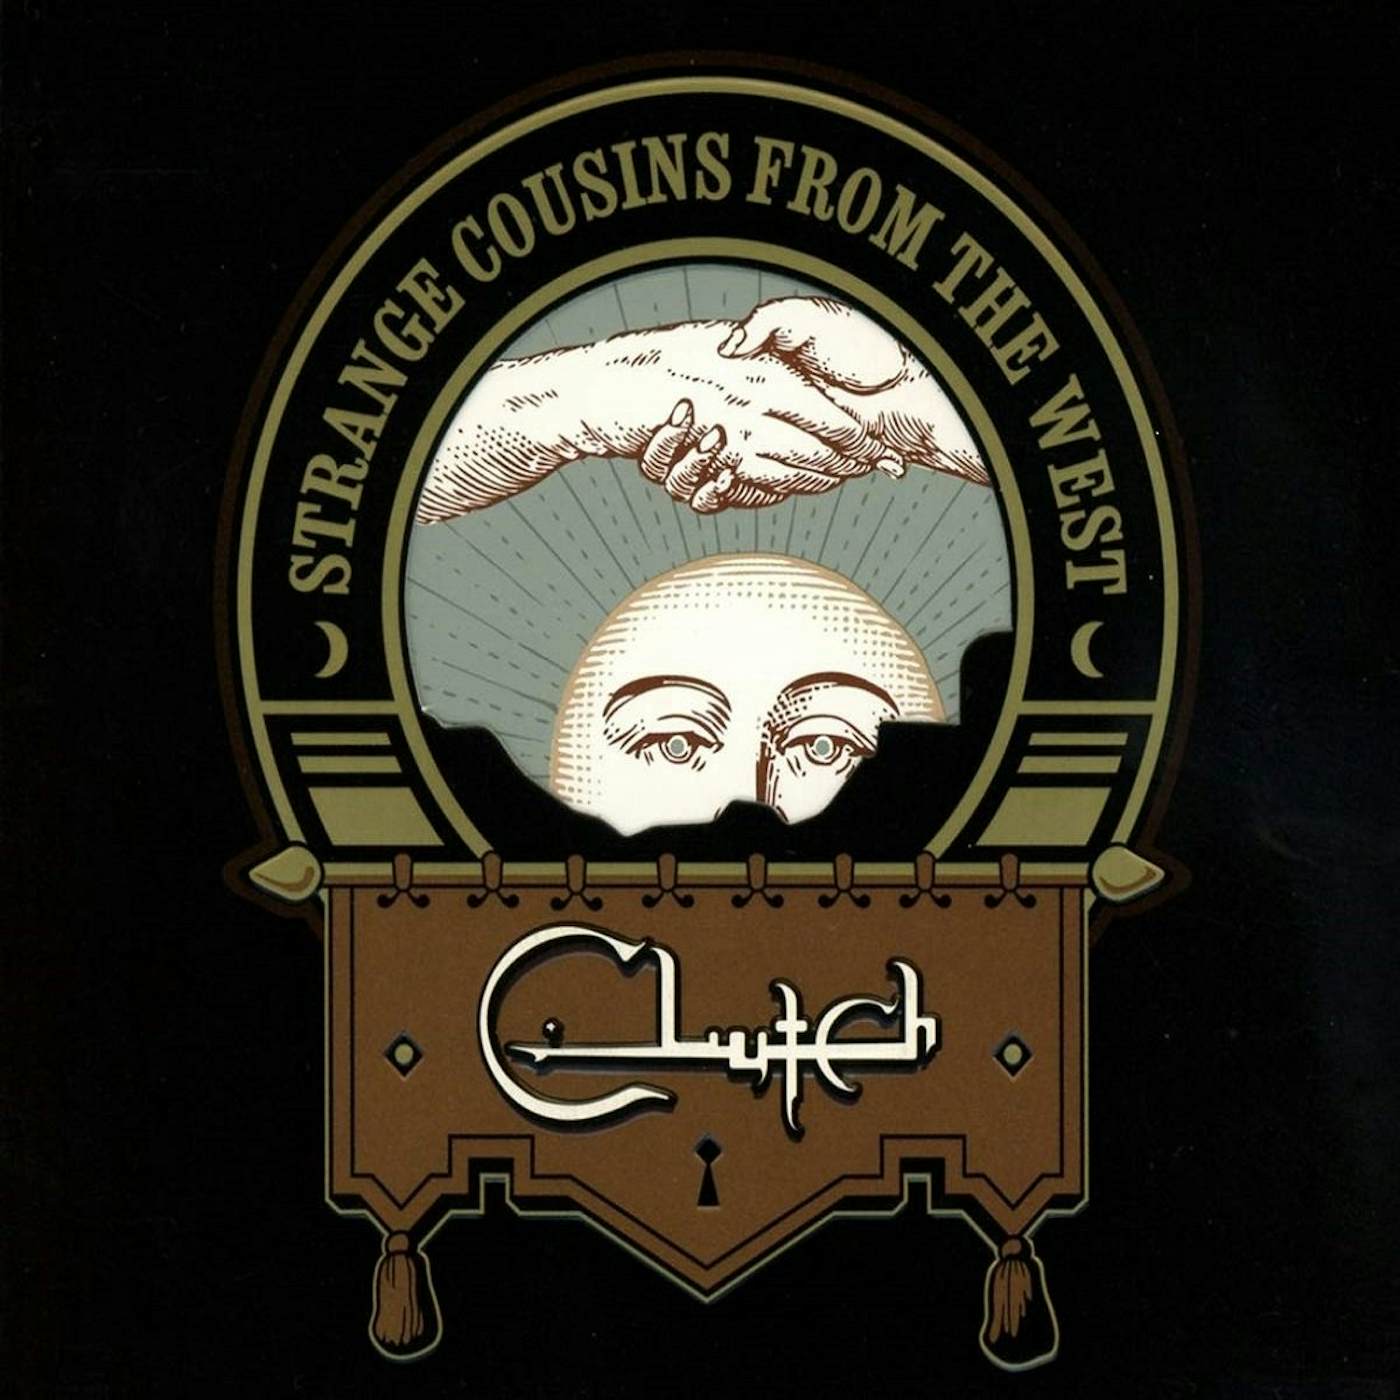 Clutch "Strange Cousins From the West Double LP" 2x12" (Vinyl)